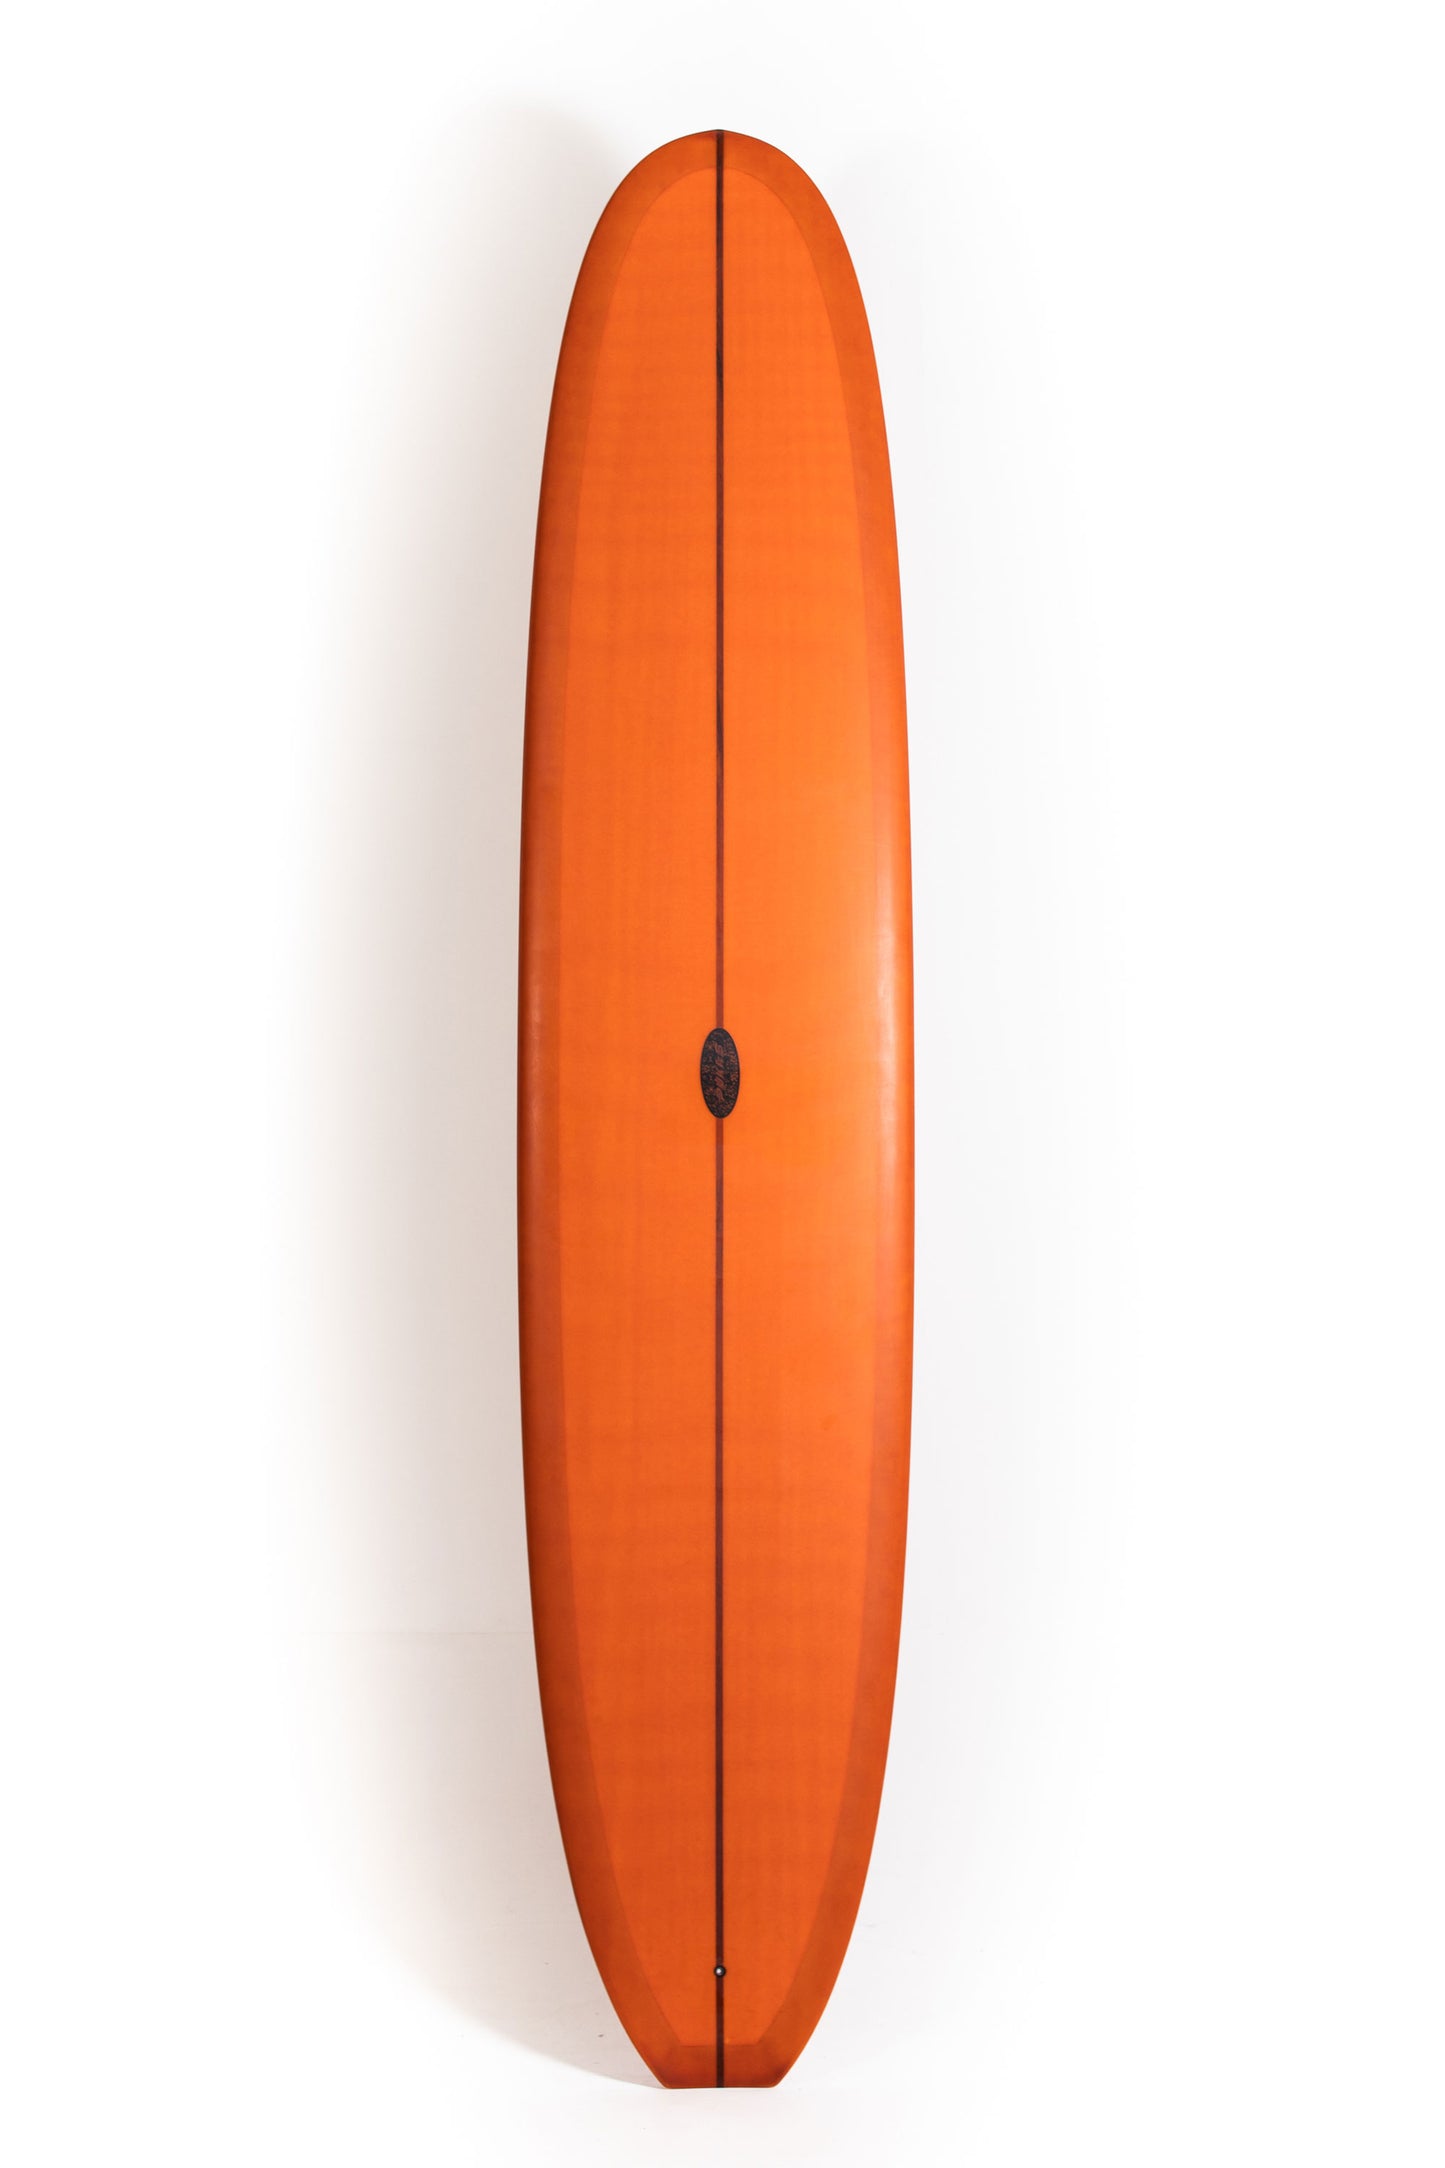 Pukas Surf Shop - Pukas Surfboards - MAYFLOWER by Axel Lorentz -  9'4" x 22,88 x 3,06 x 76.71L - AX09728